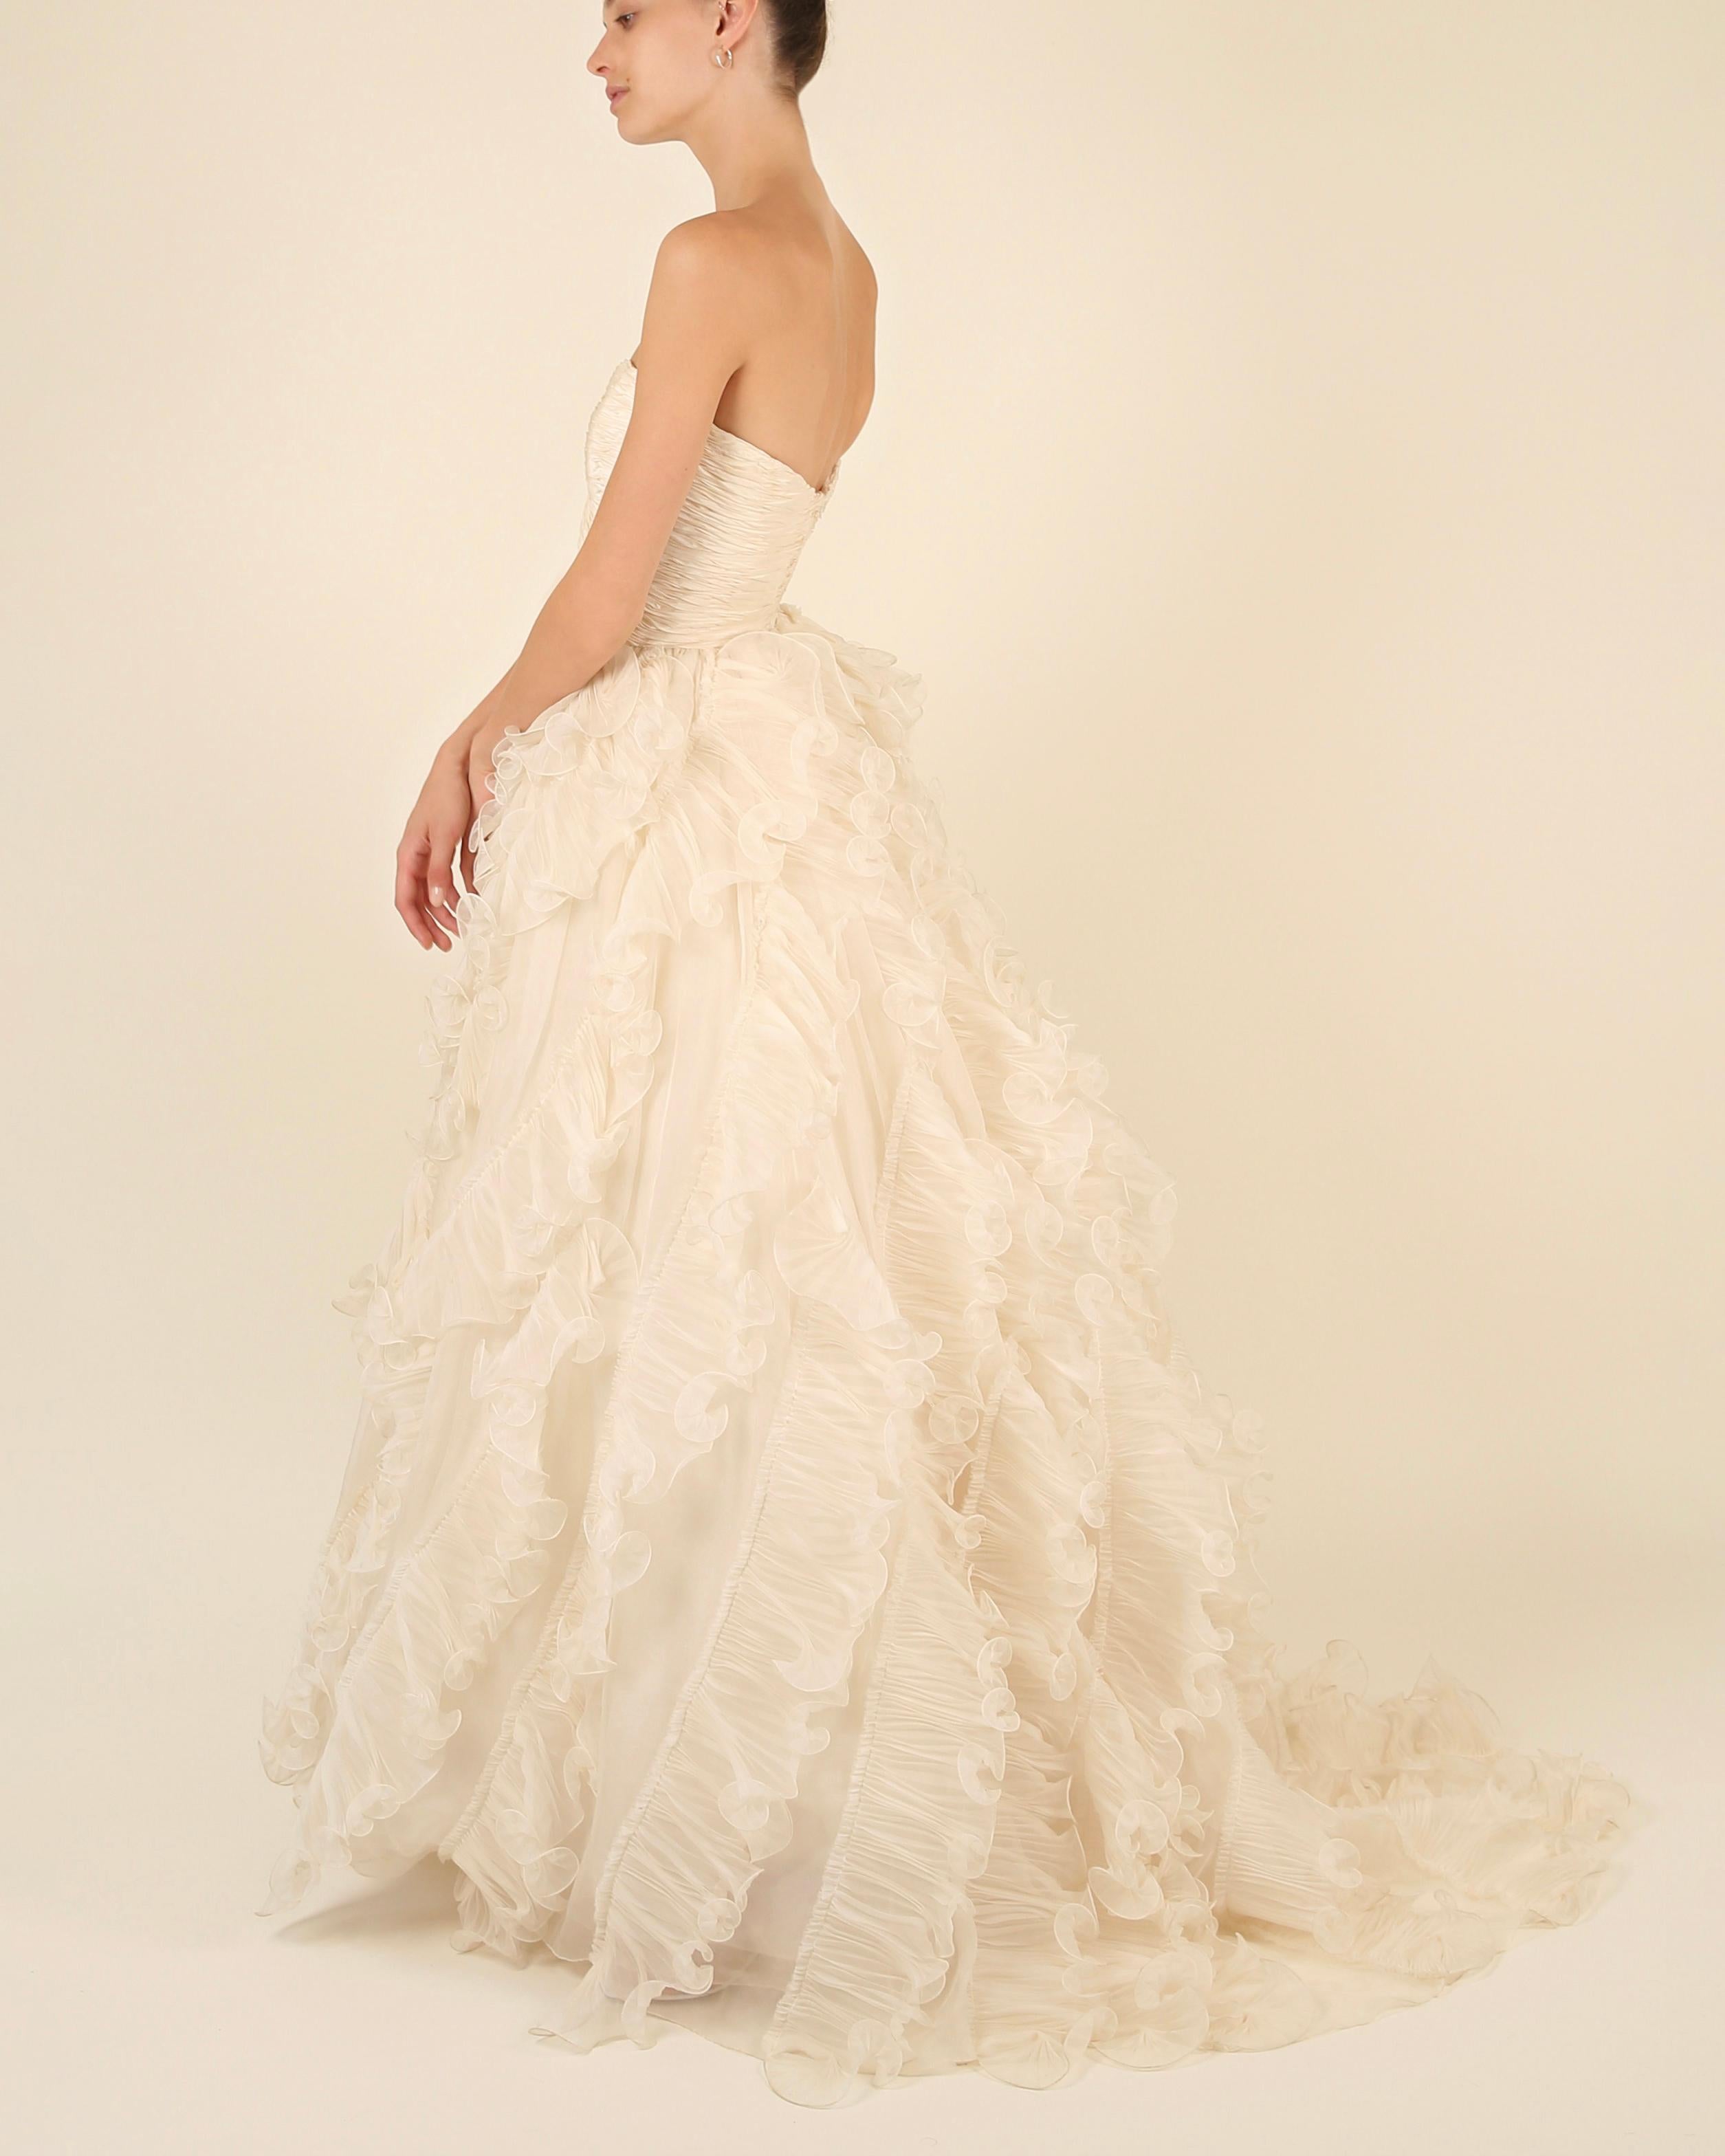 Oscar de la Renta S/S08 bridal ivory strapless vintage ruffle wedding dress gown For Sale 1